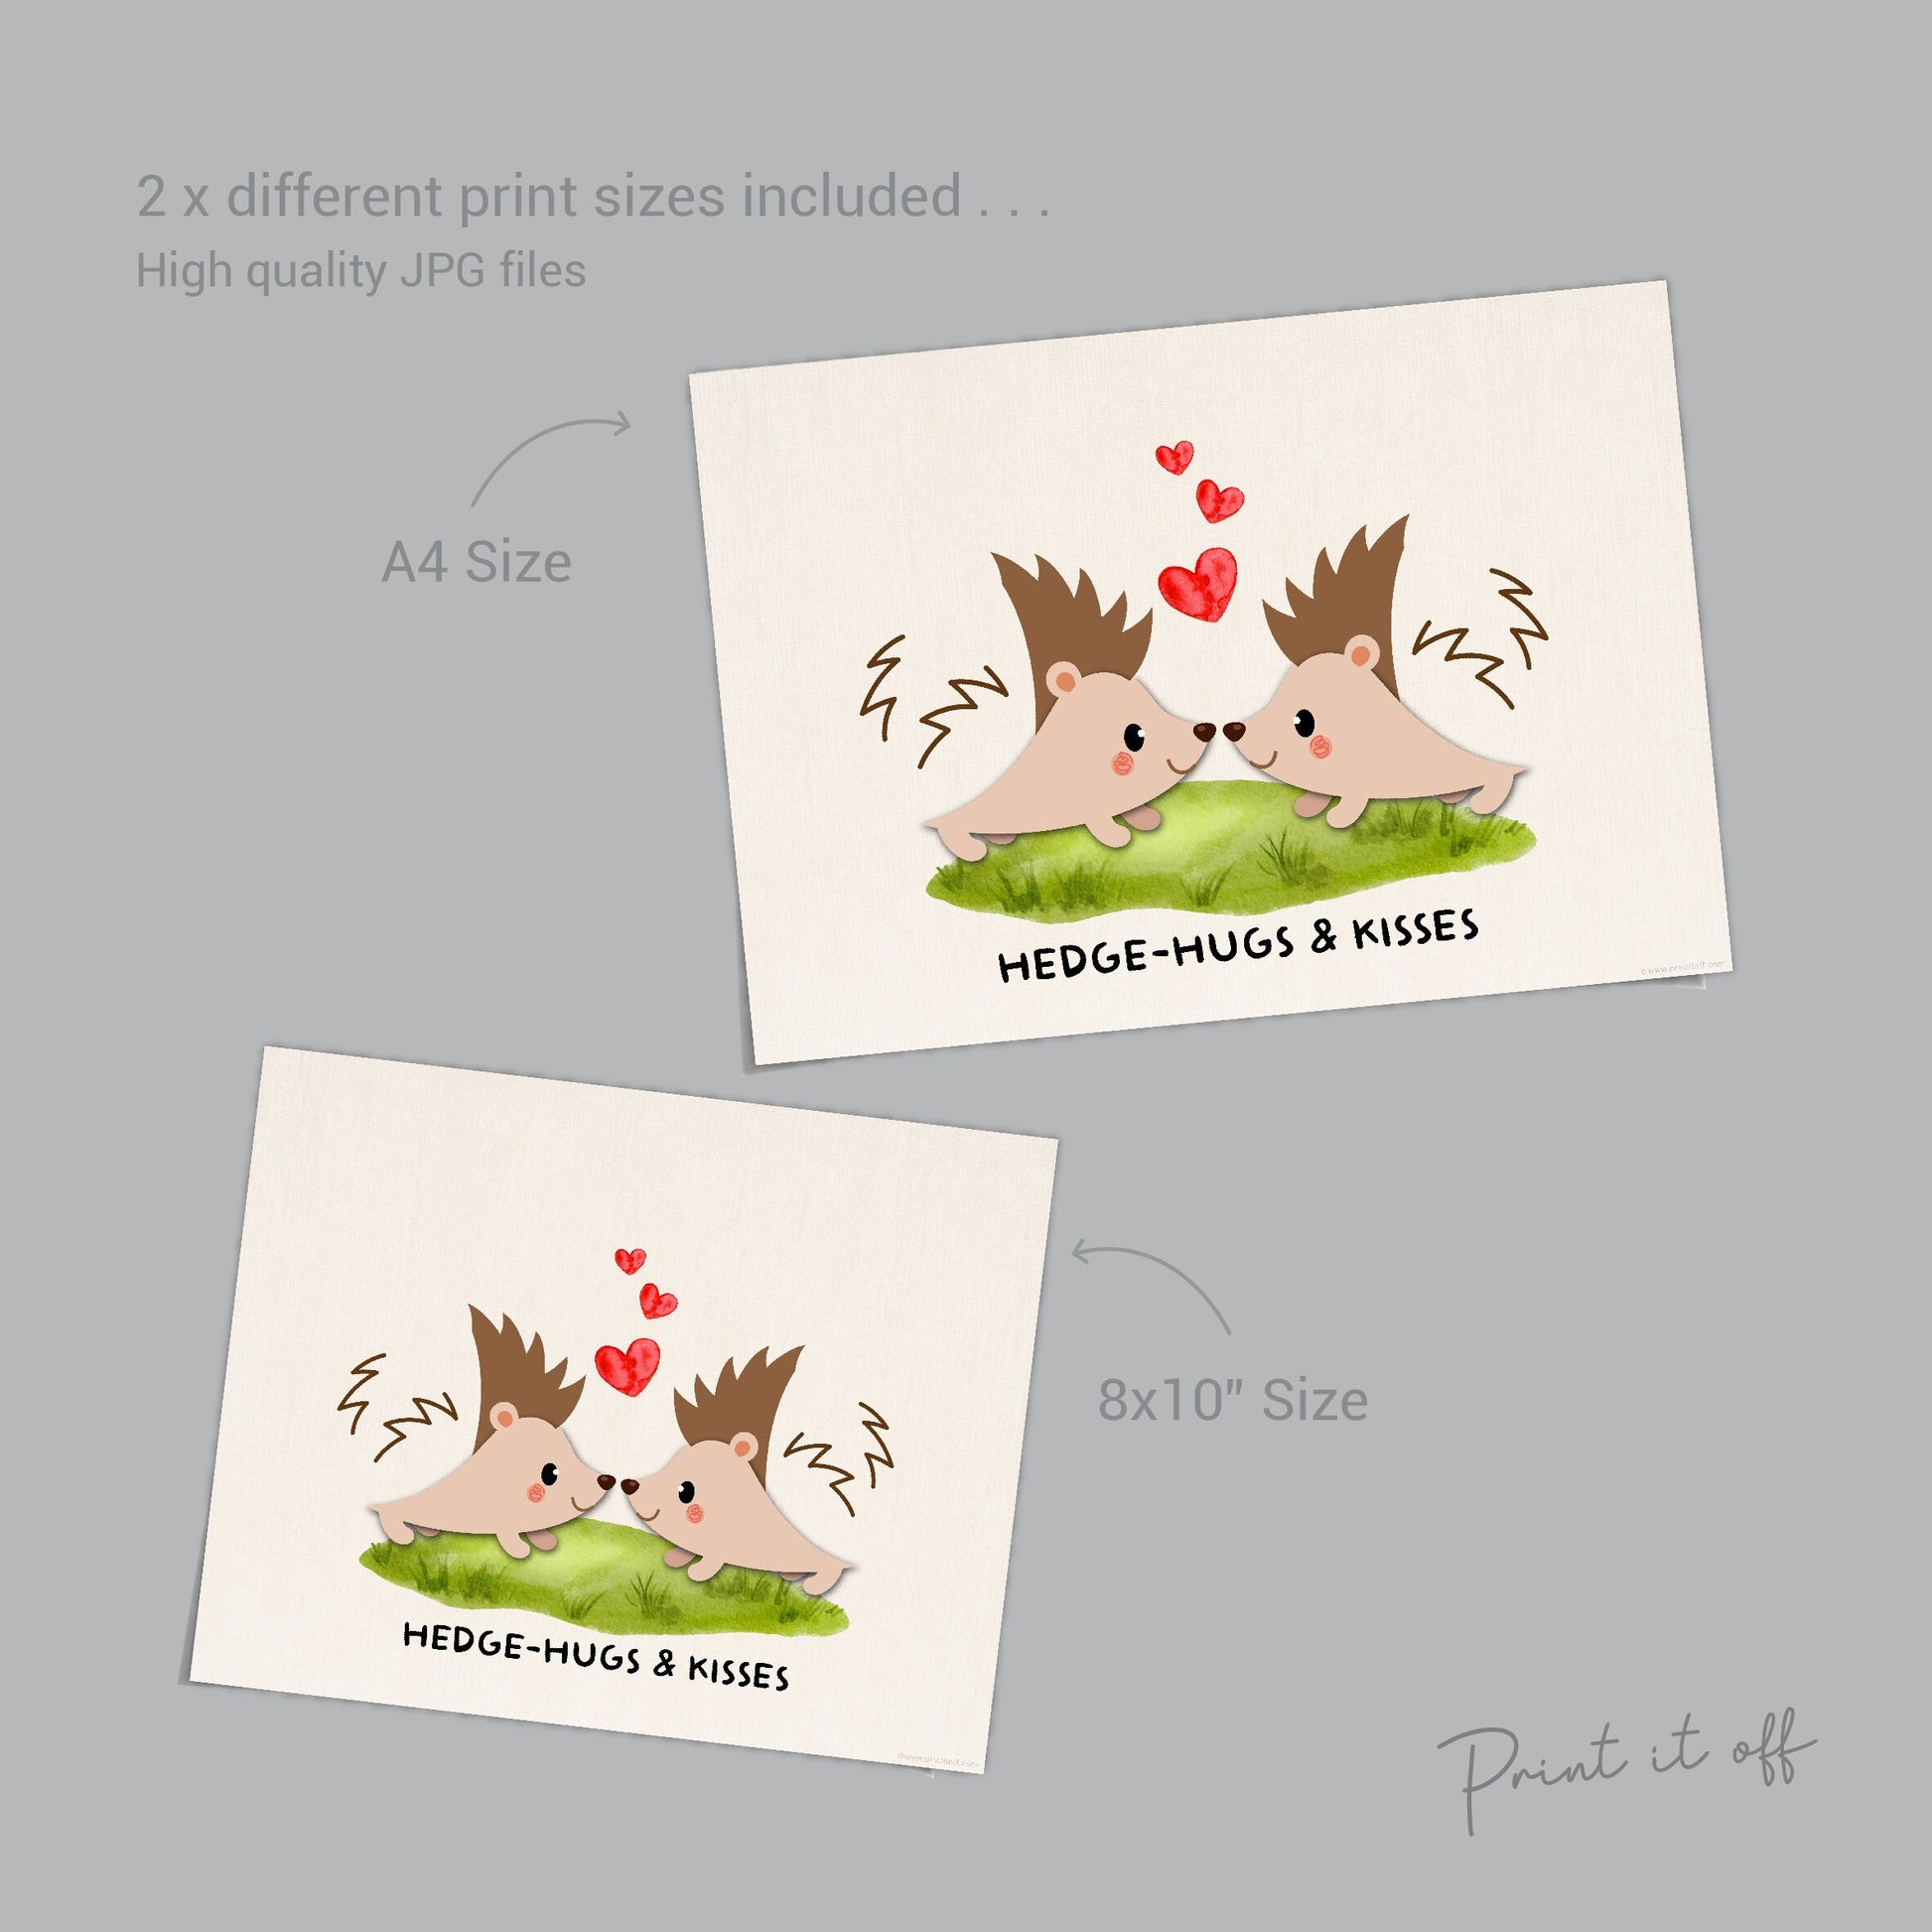 Hedge-Hugs & Kisses Handprint Art Craft / Valentines Love Thanksgiving Fall Autumn / Hedgehog / Kids Toddler Baby Card / Print It Off 0564